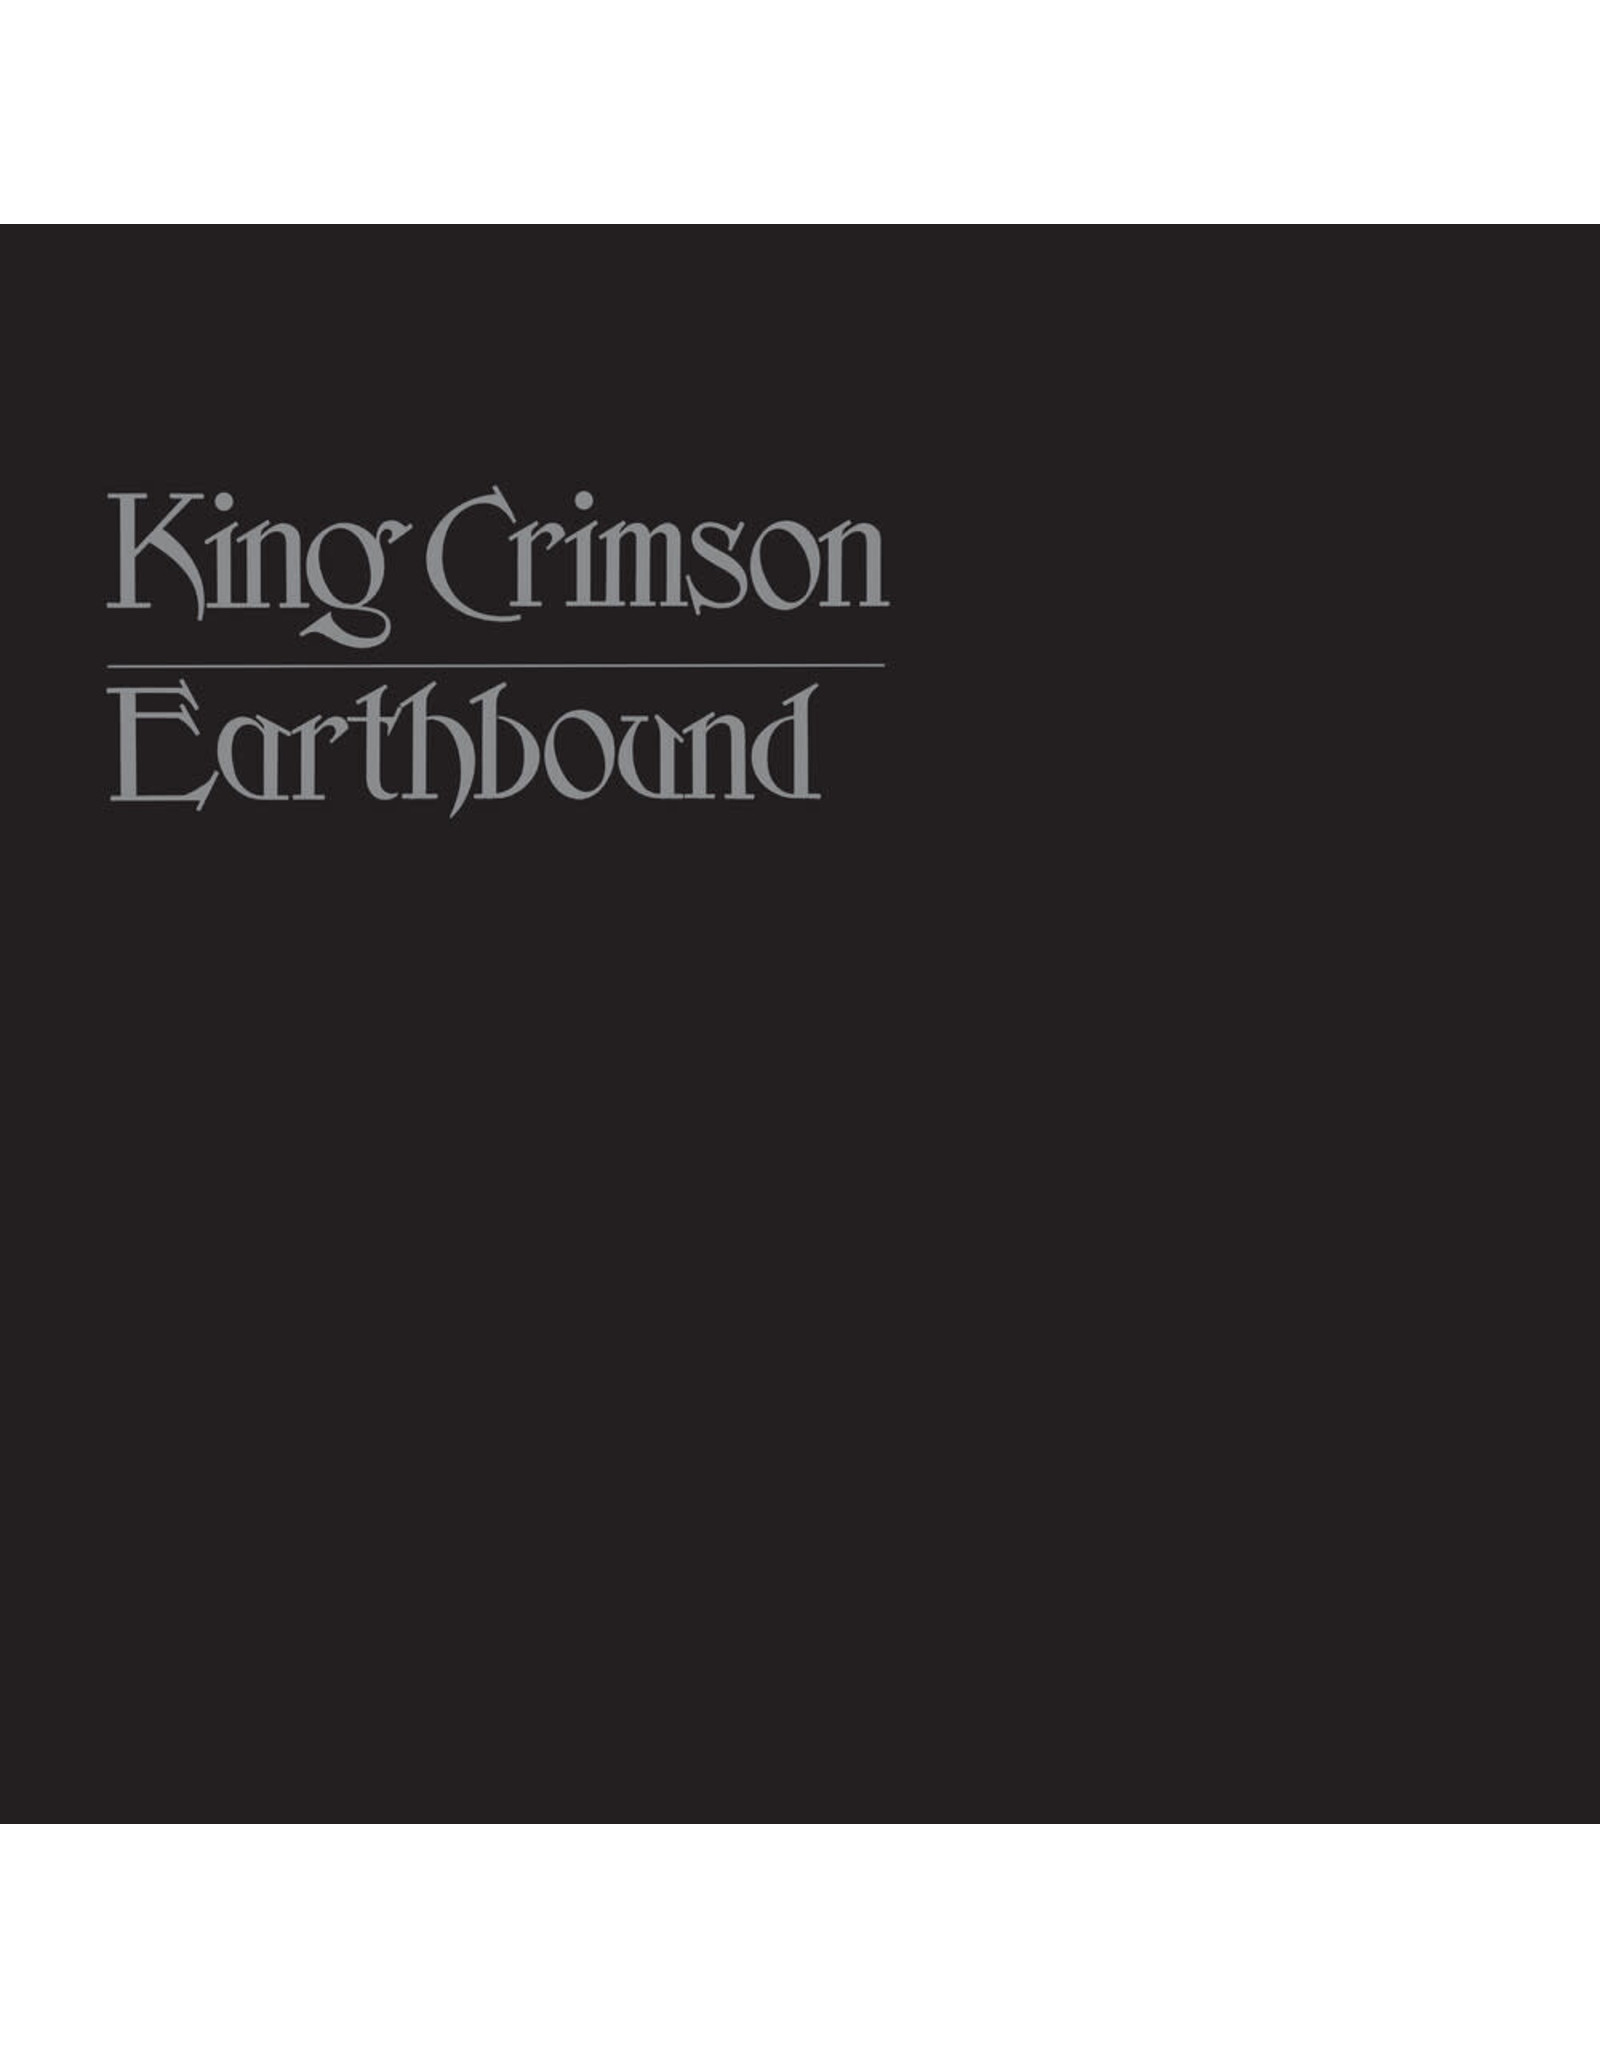 King Crimson - Earthbound LP